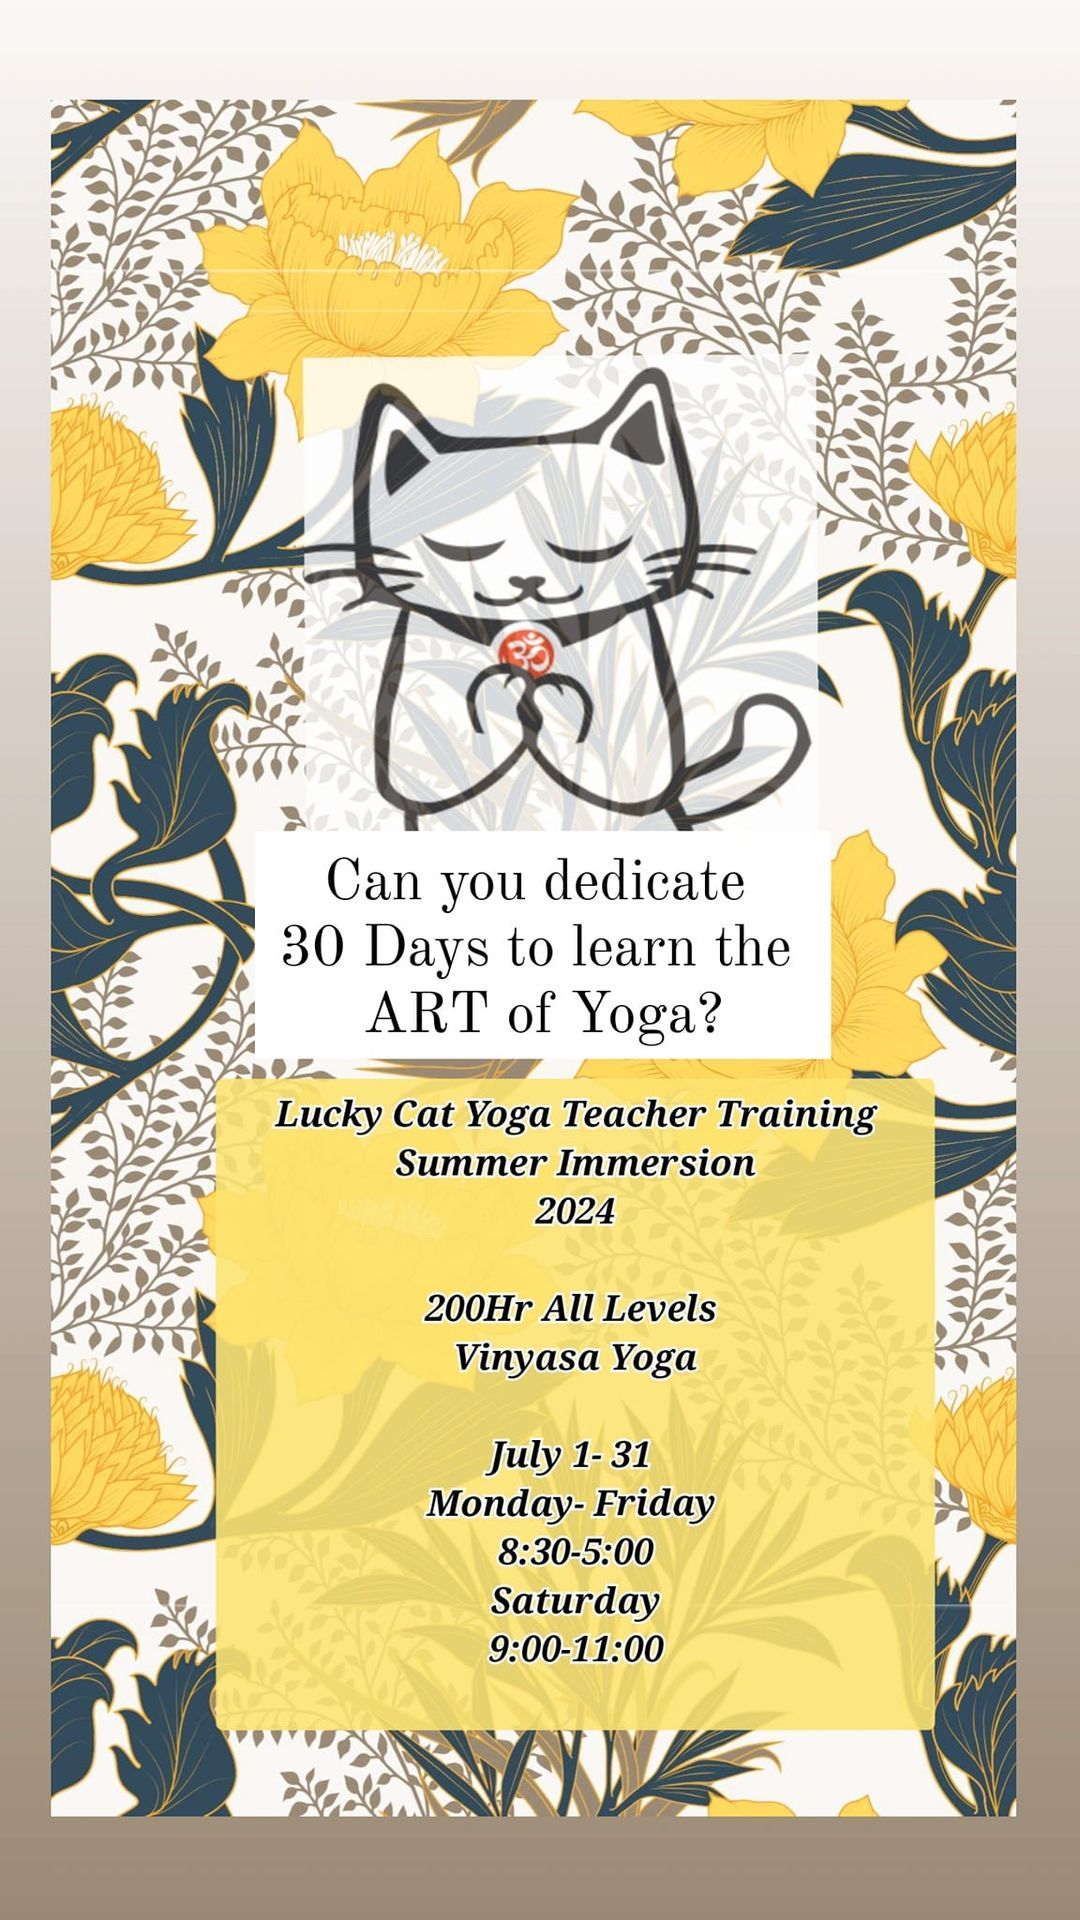 200hr All Levels Vinyasa Yoga Teacher Training: 30 Day Summer Intensive at Lucky Cat Yoga 